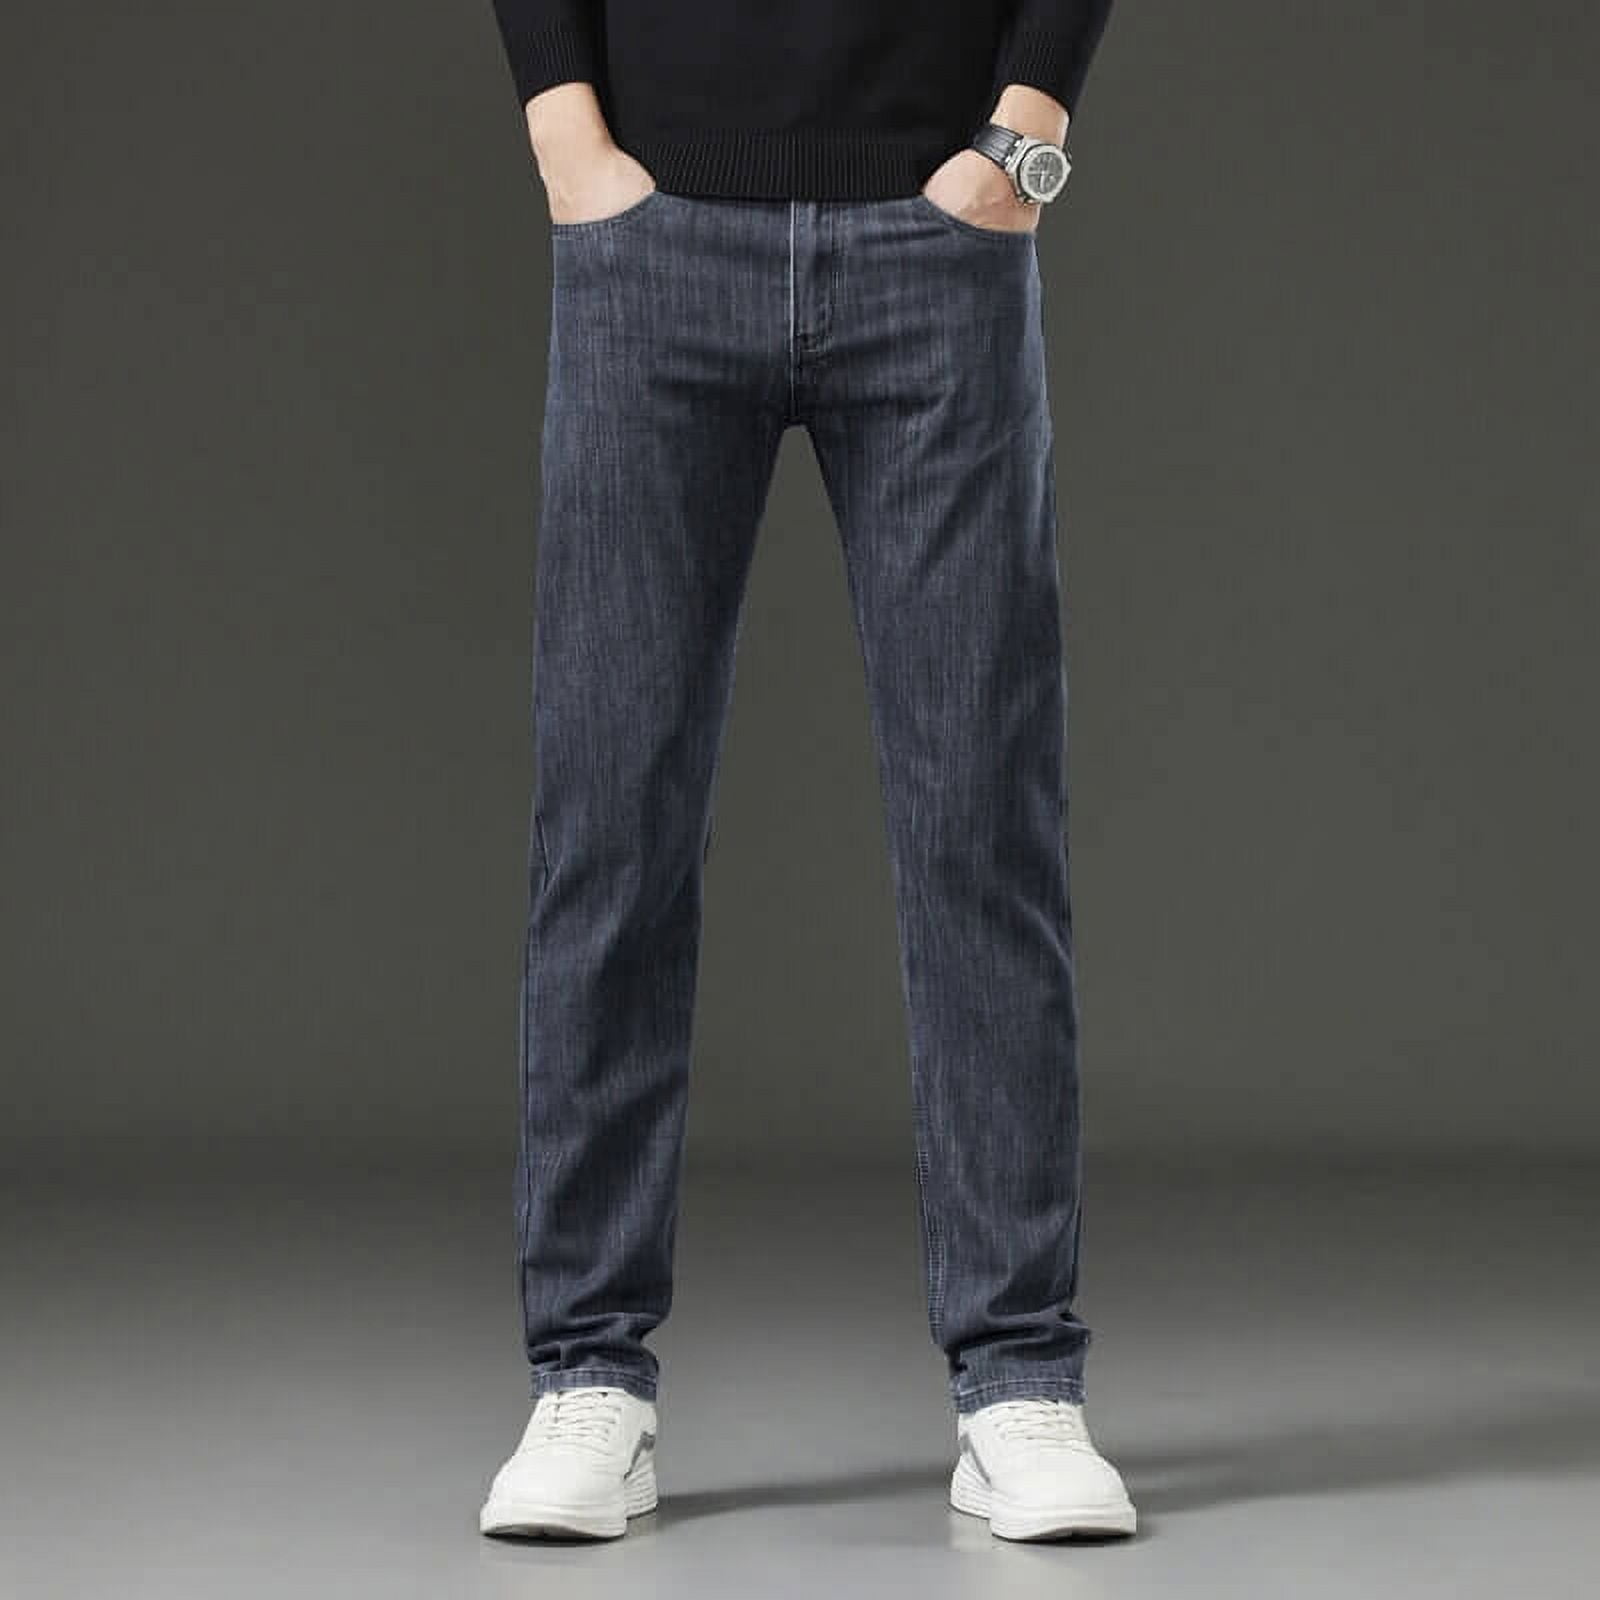 Men's Jeans Slim Fit Stretch Denim Pants Straight Leg - Walmart.com